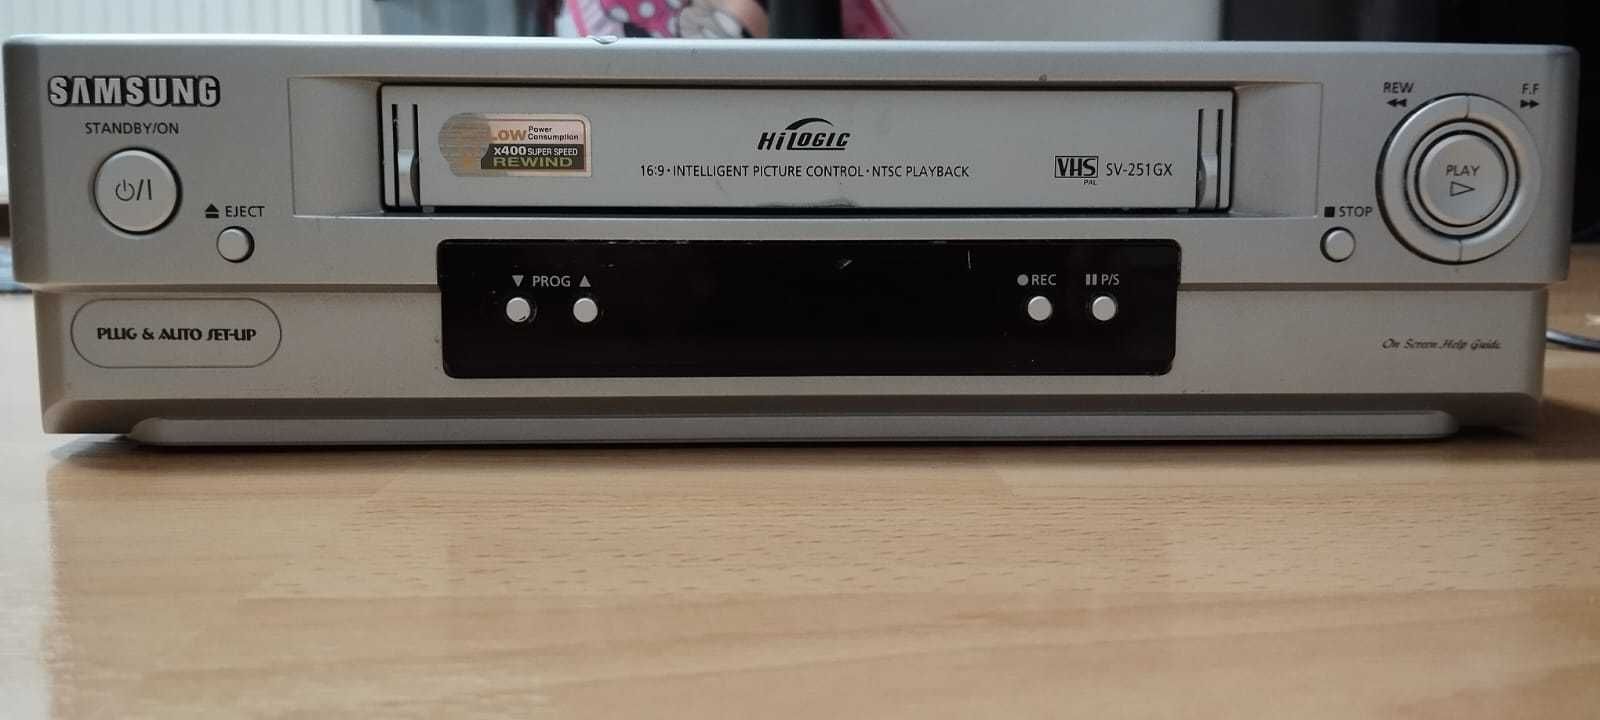 Video Recorder Player VCR VHS SAMSUNG SV-251 GX